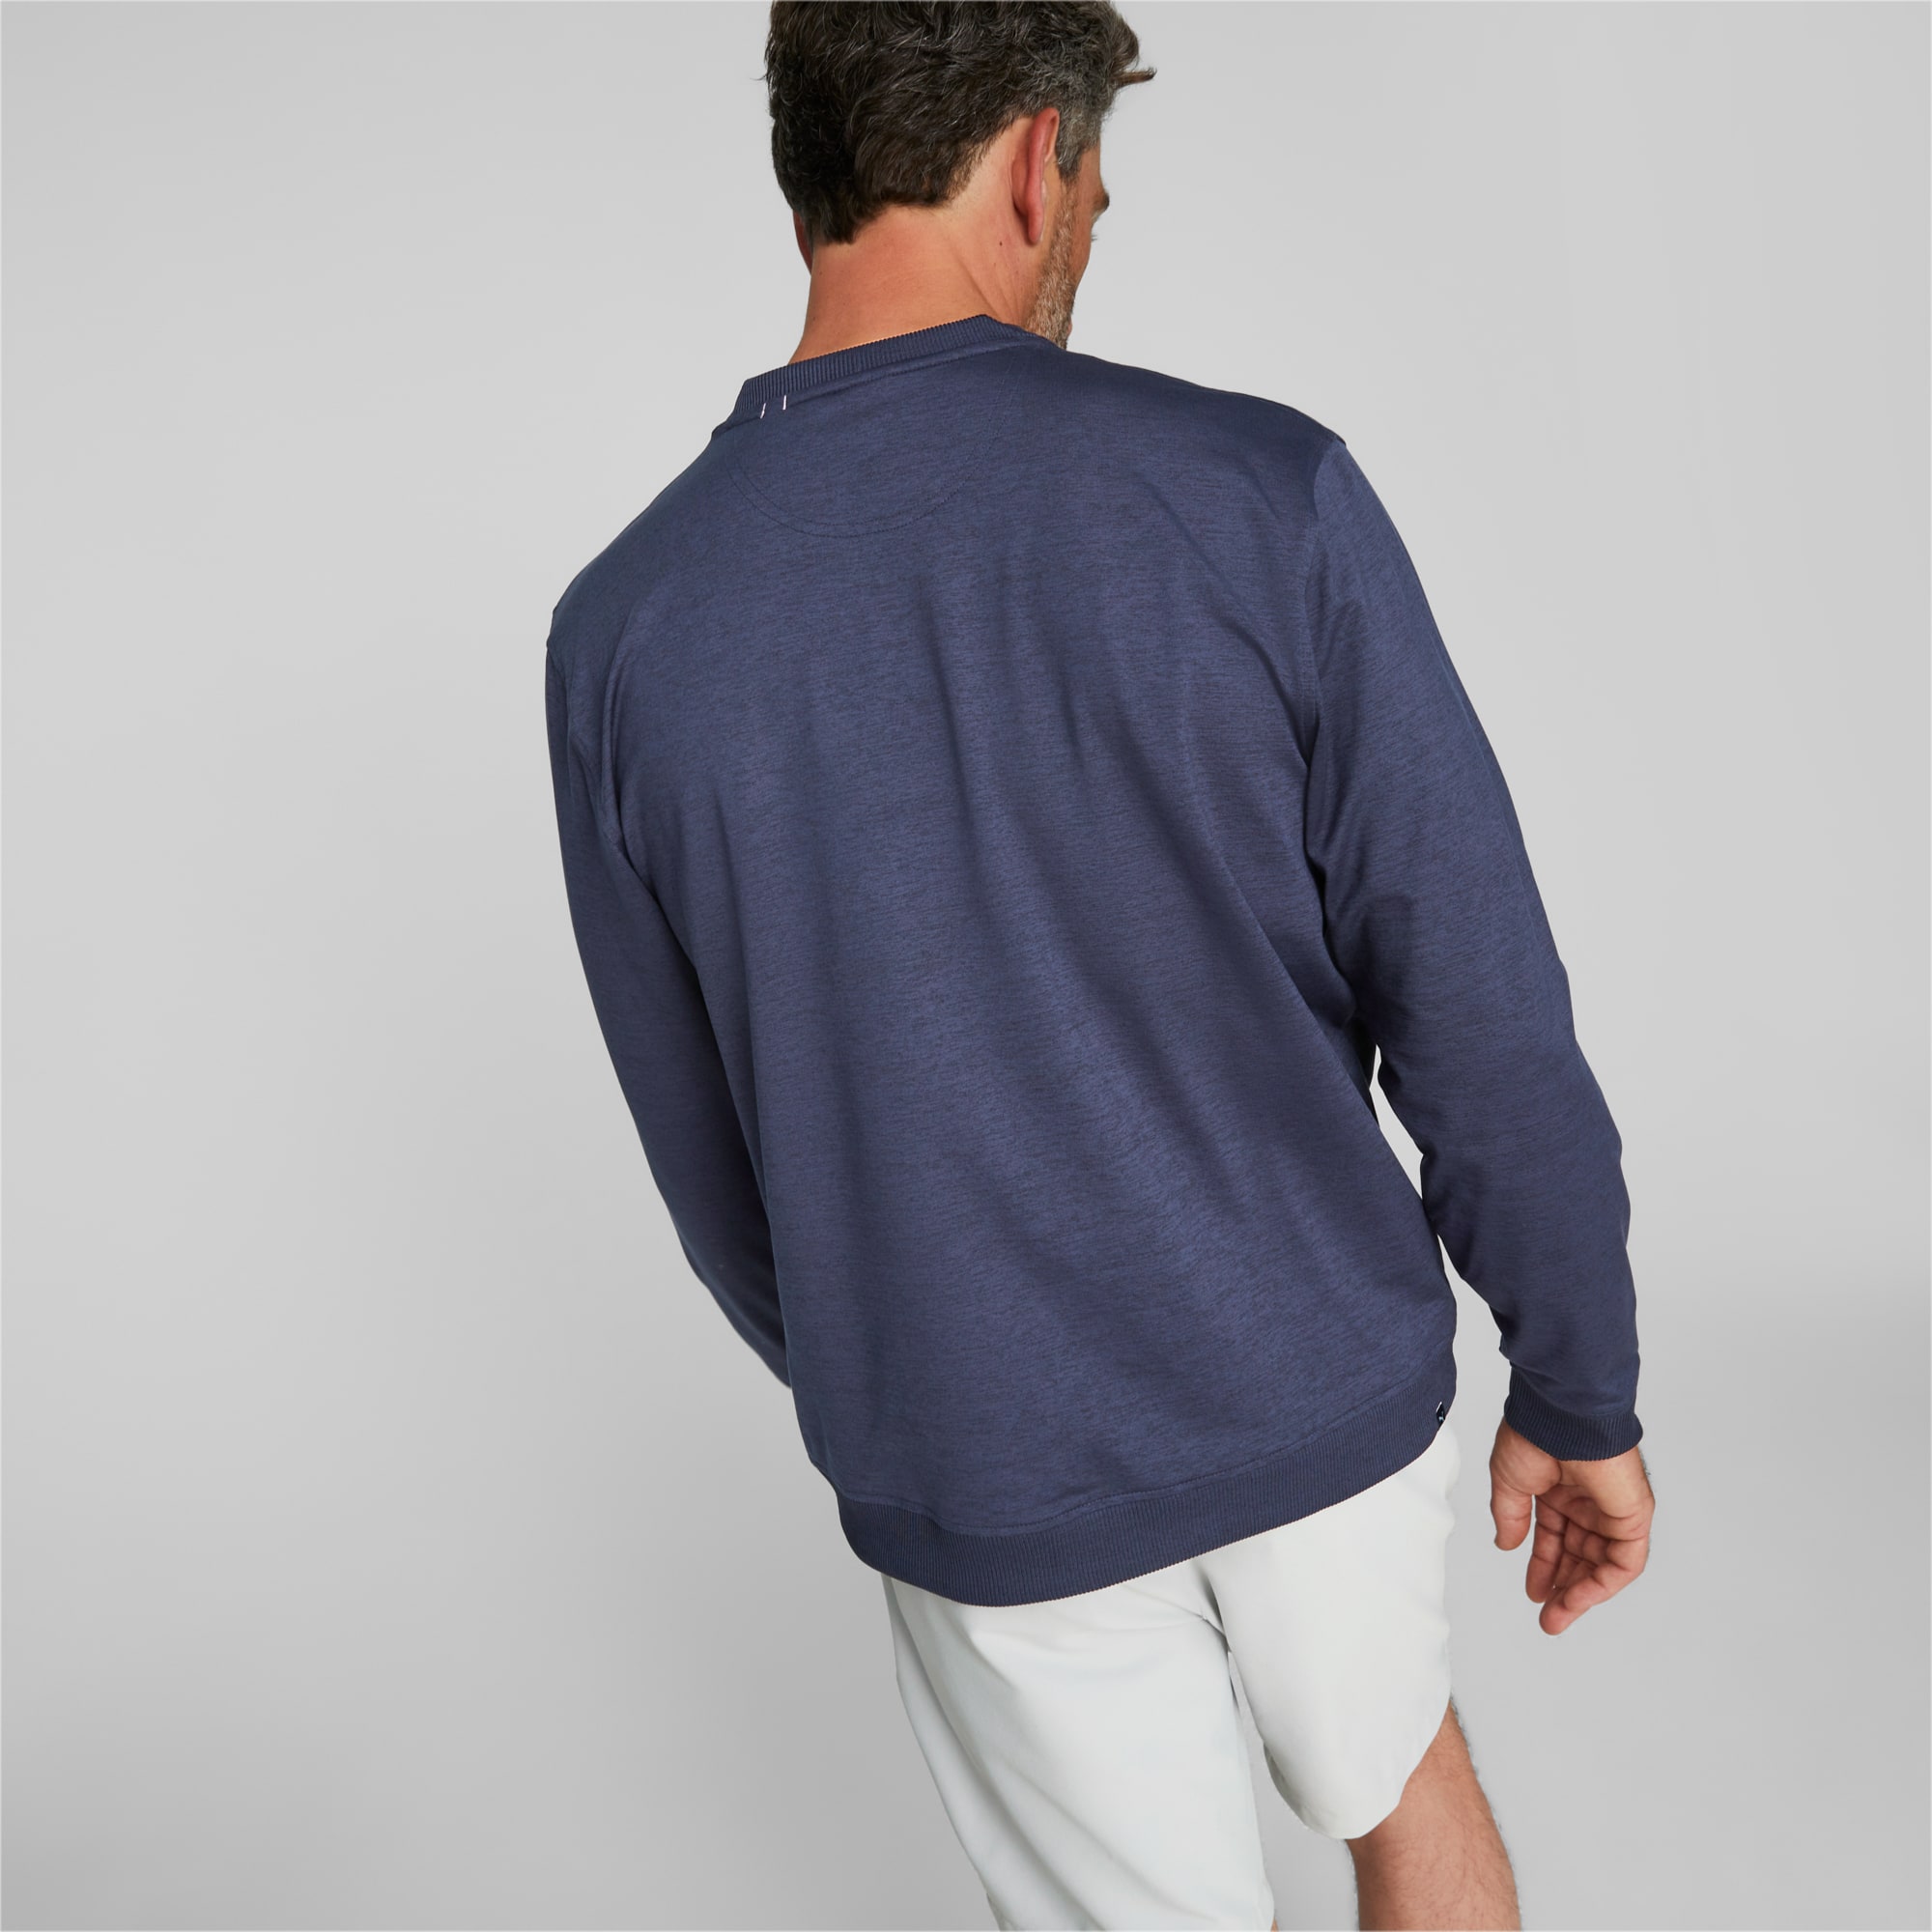 PUMA X Arnold Palmer Cloudspun V-Neck Golf Sweatshirt Men, Dark Blue, Size S, Clothing